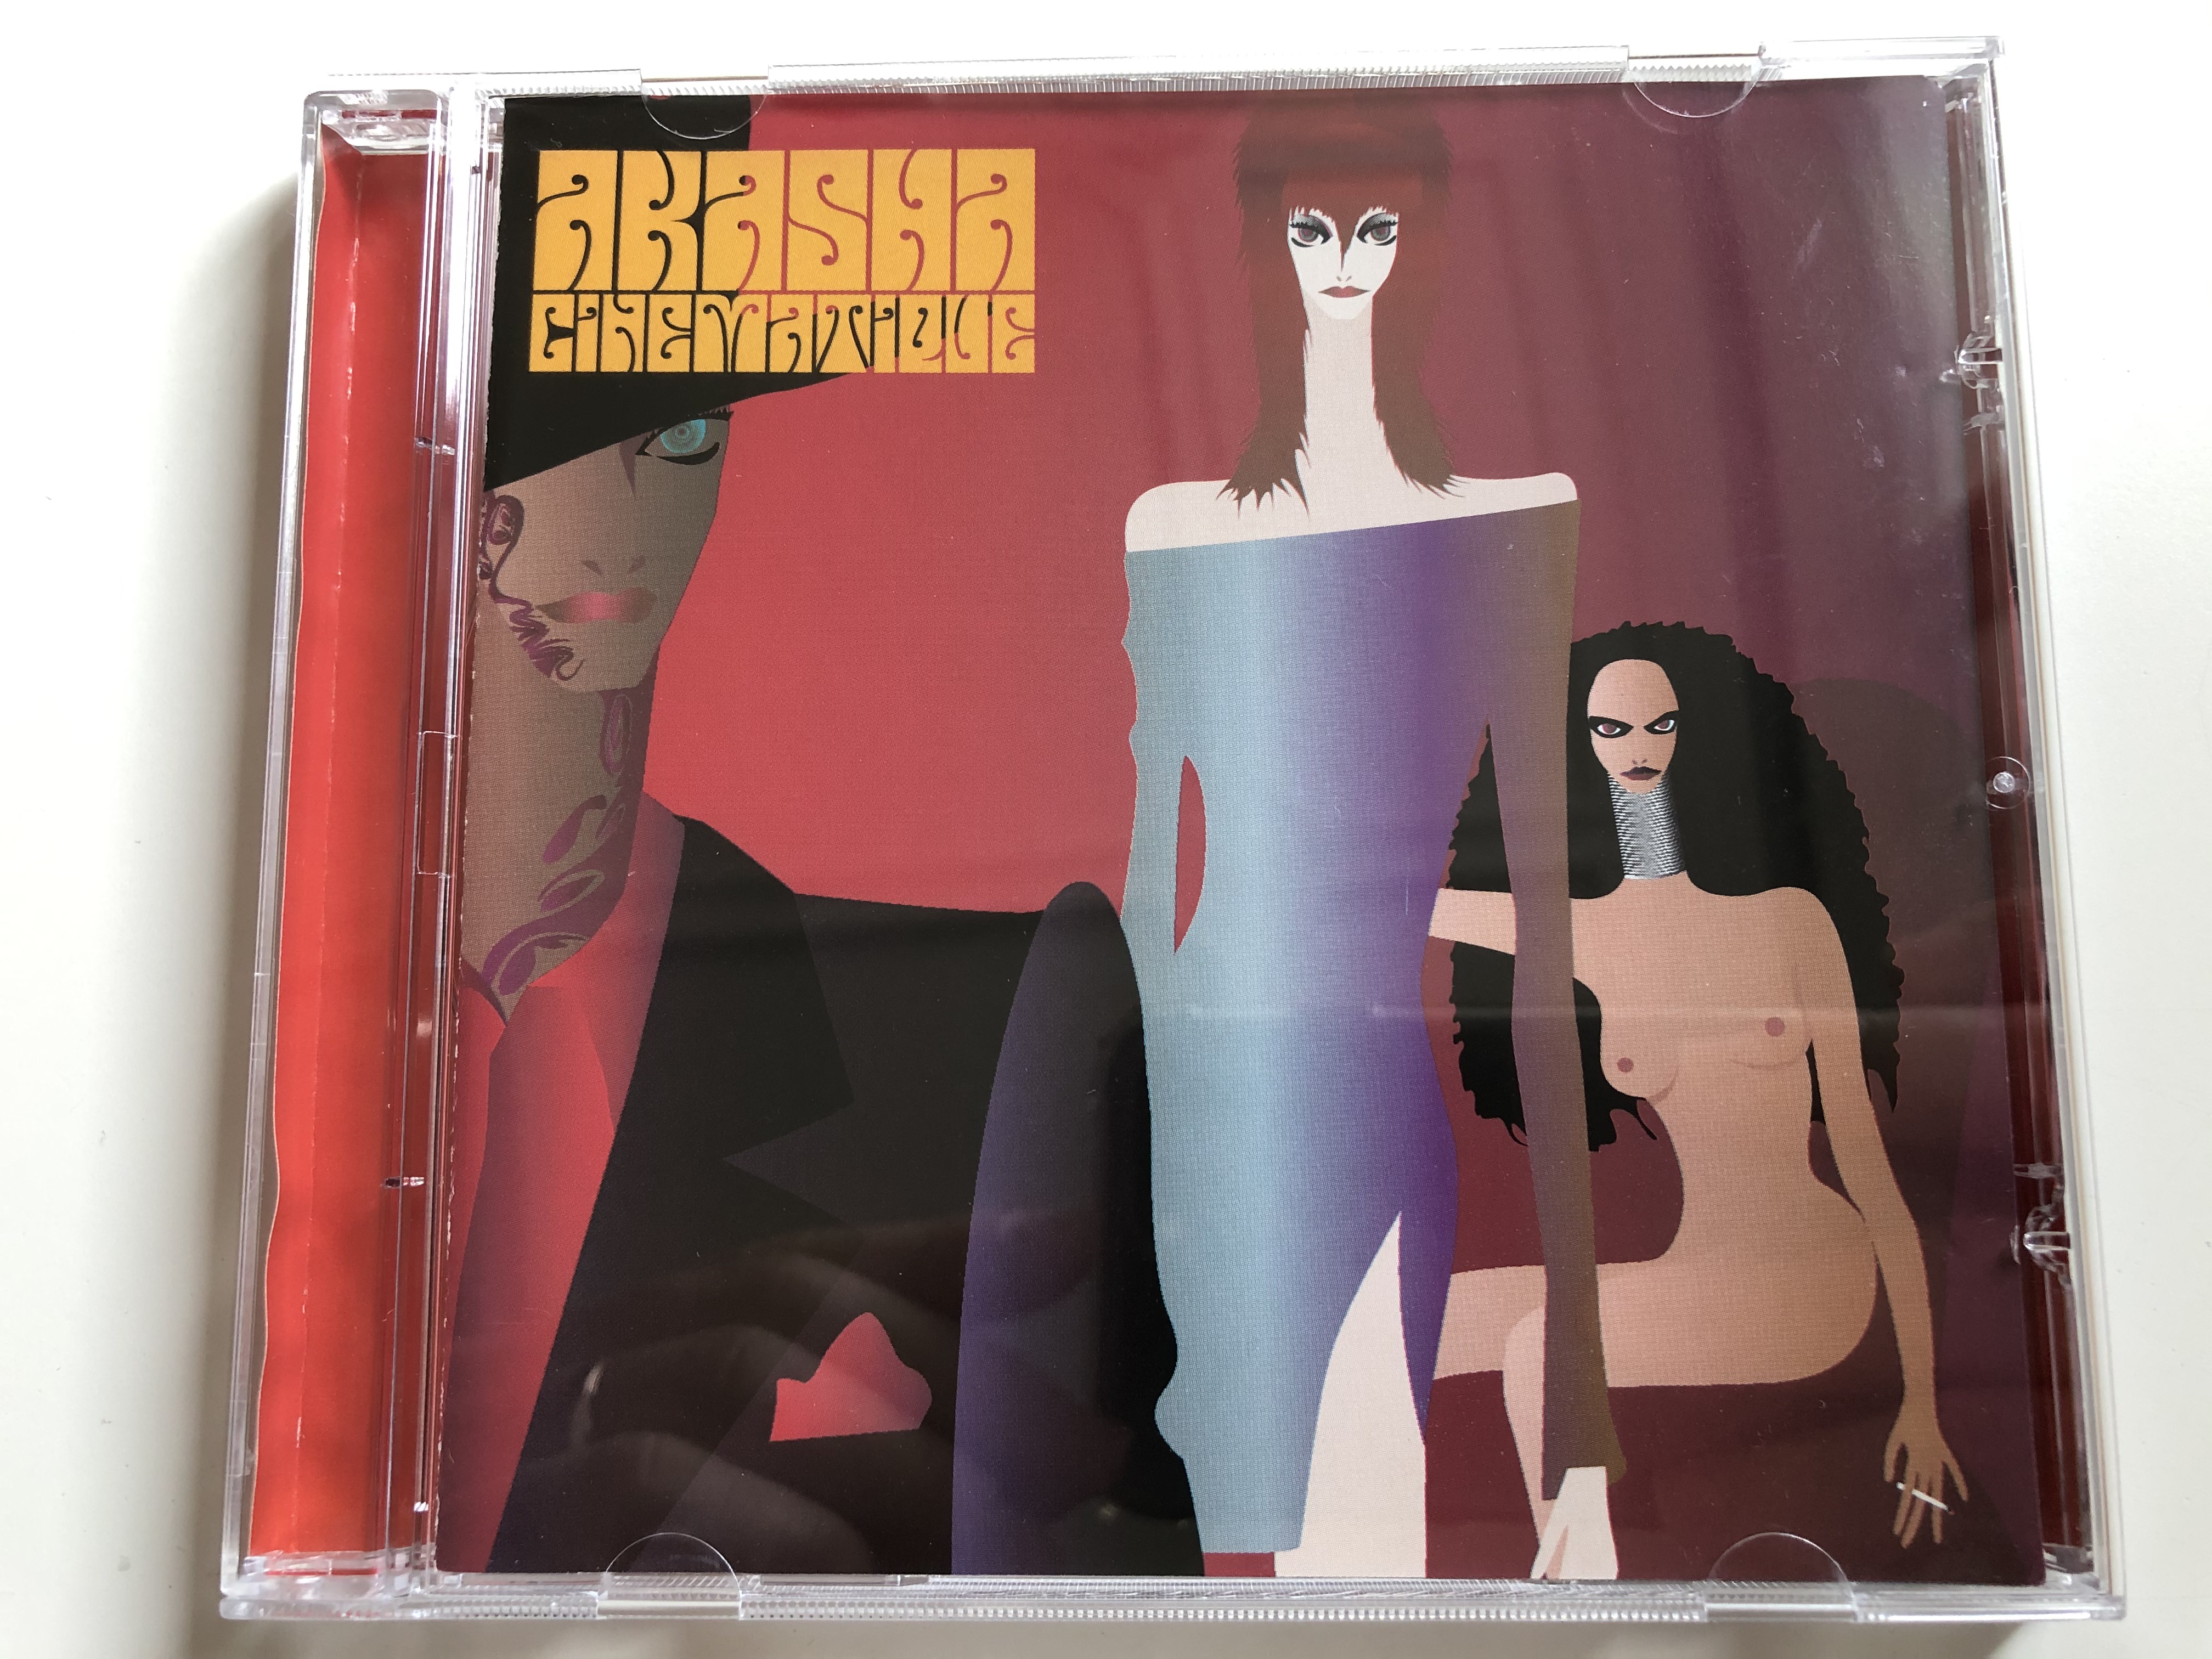 akasha-cinematique-wall-of-sound-audio-cd-1998-wall-cd016-1-.jpg